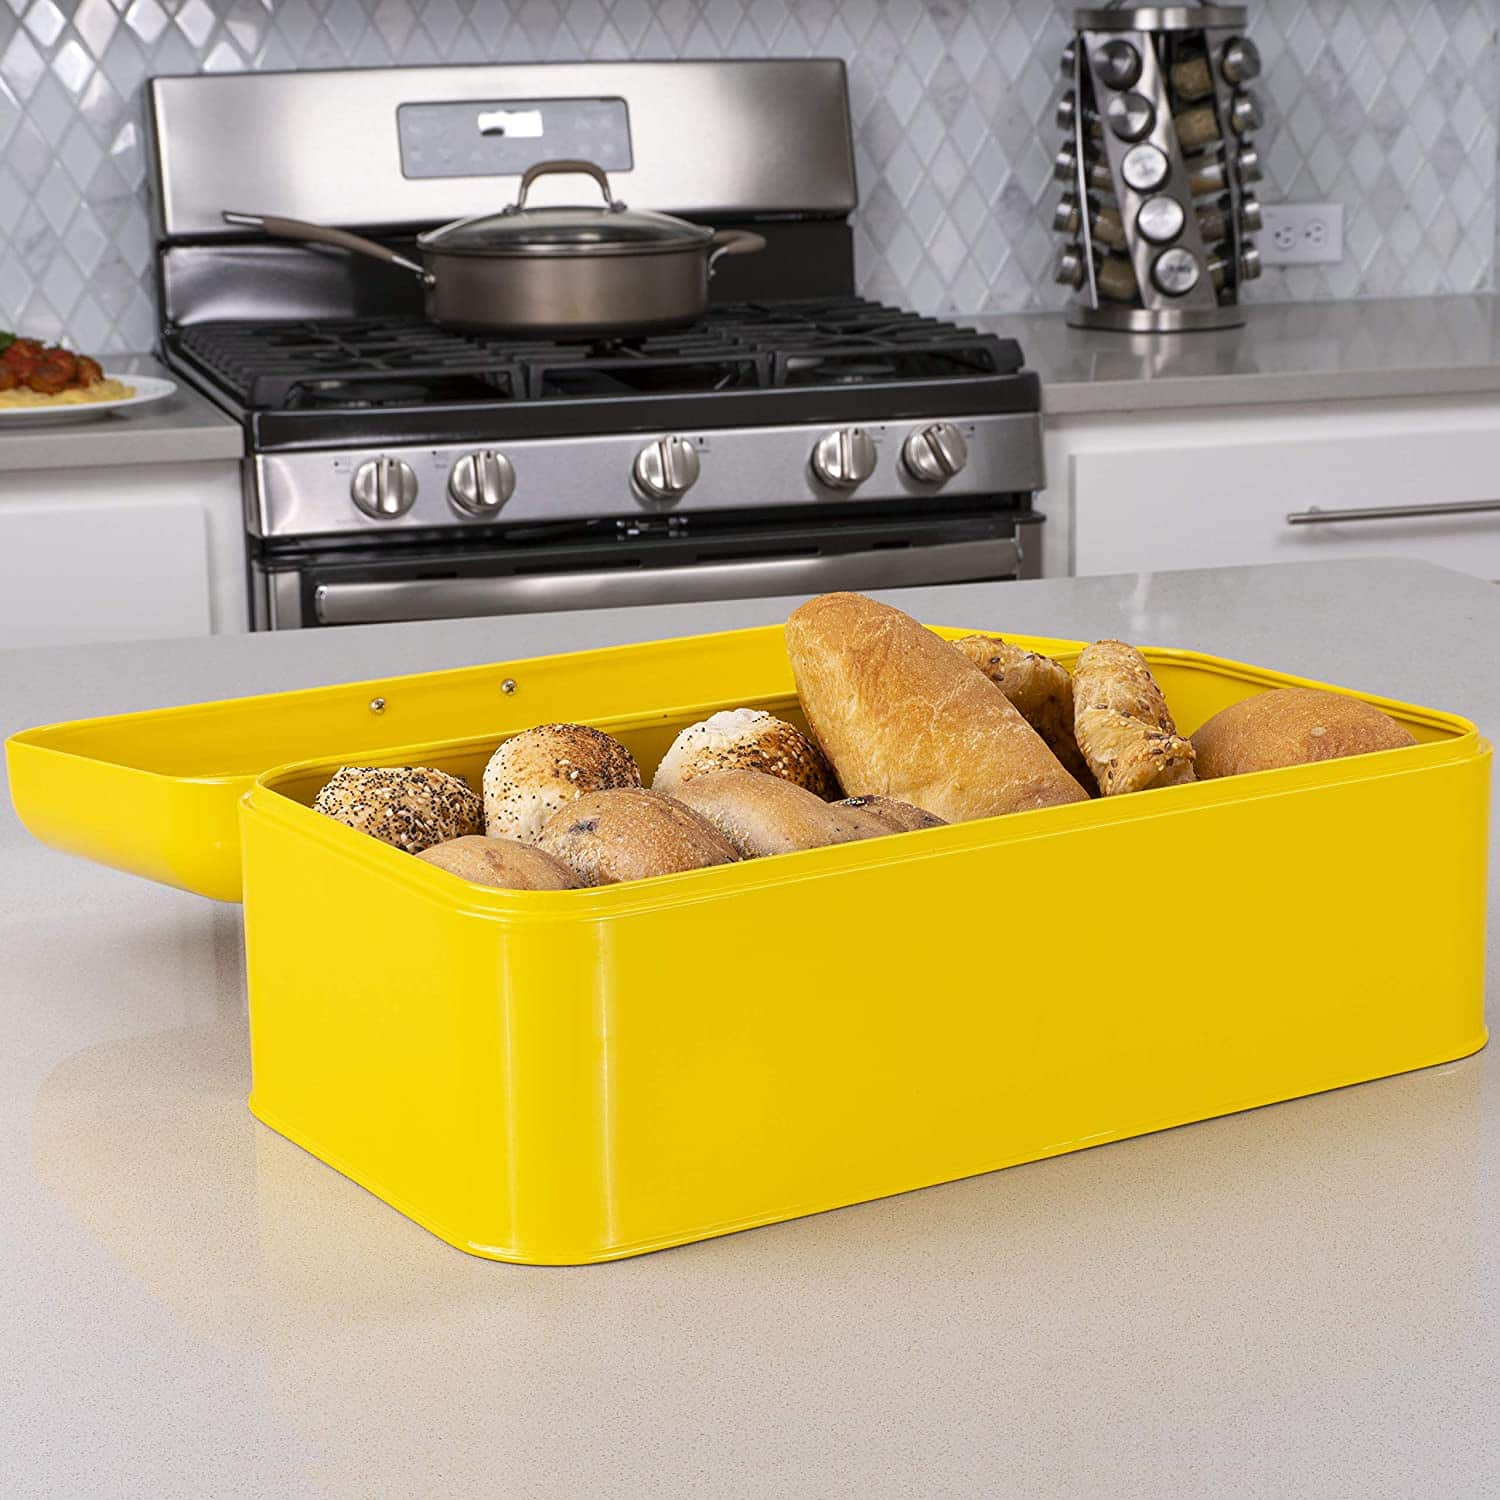 bread-box-yellow